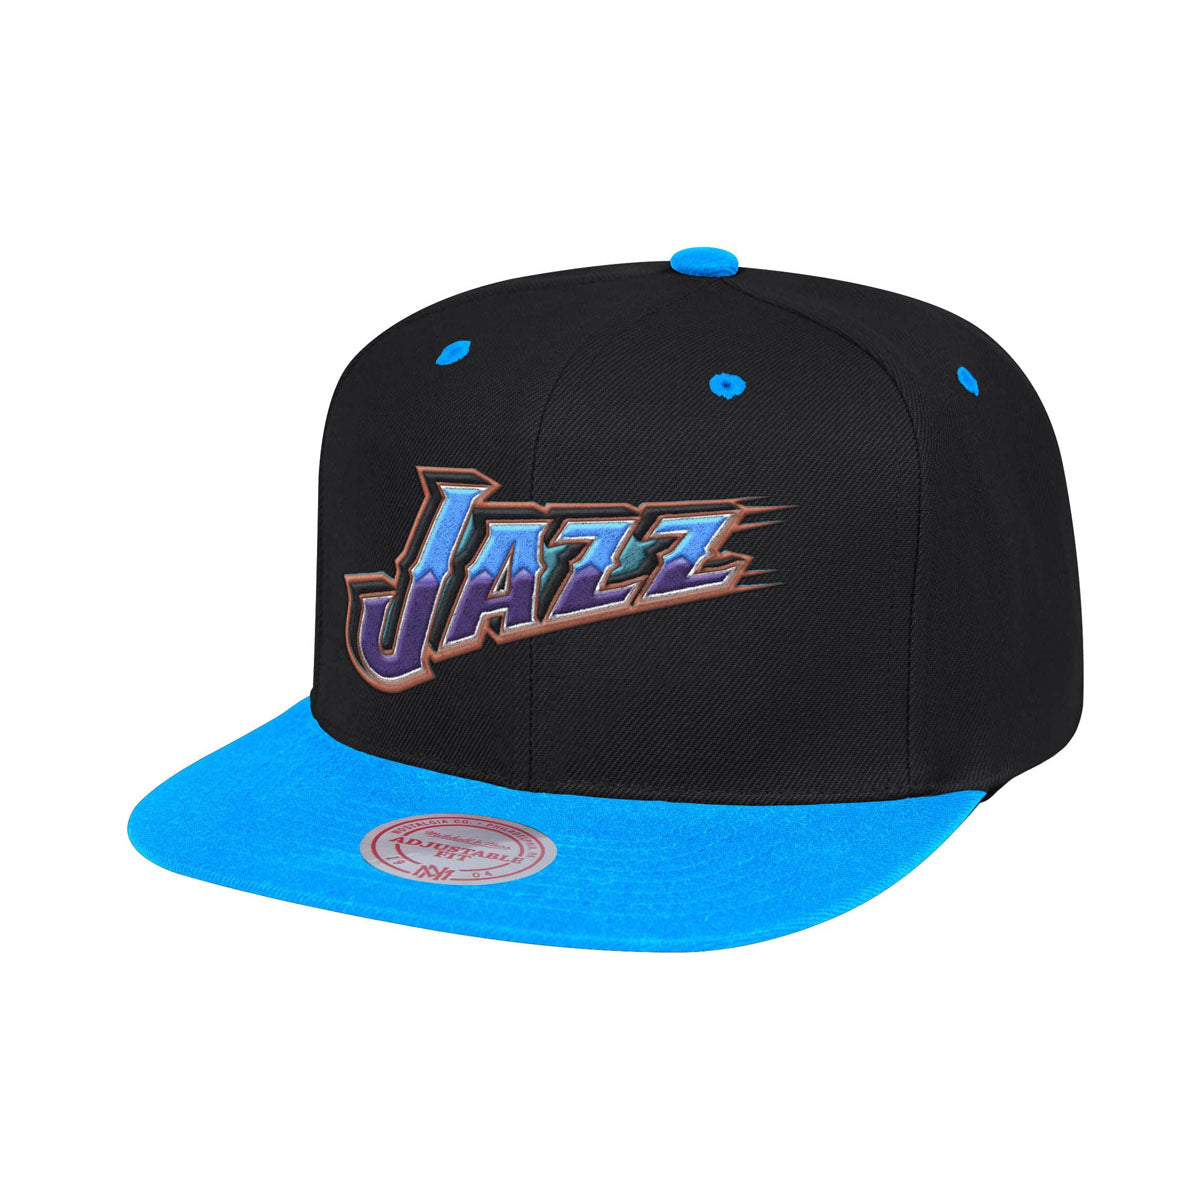 Men's Mitchell & Ness Black/White Utah Jazz Snapback Adjustable Hat